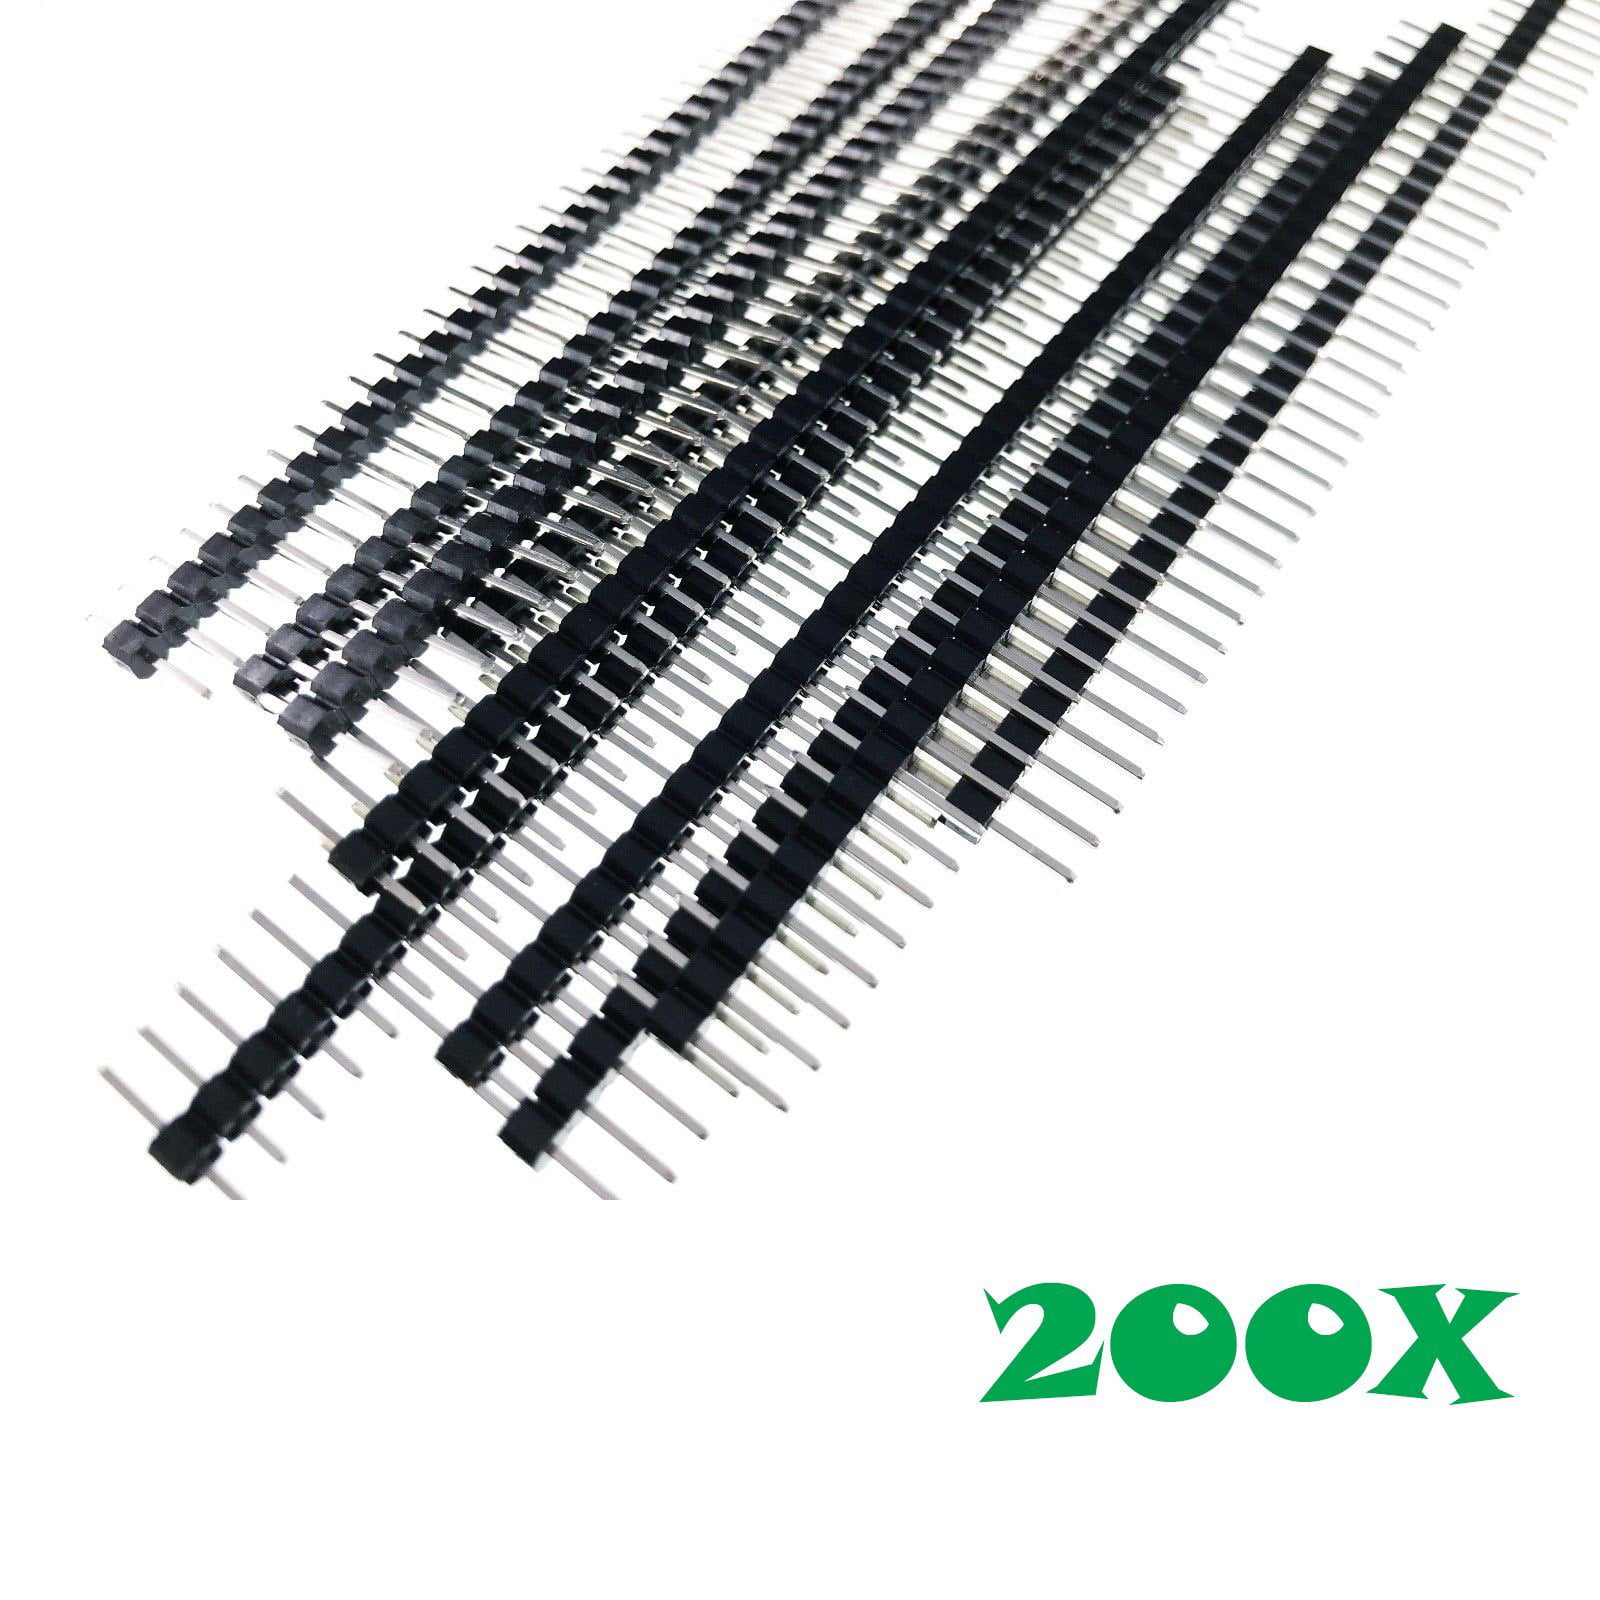 100PCS 2.54mm 40 Pin Male Single Row Pin Header Strip GOOD QUALITY 